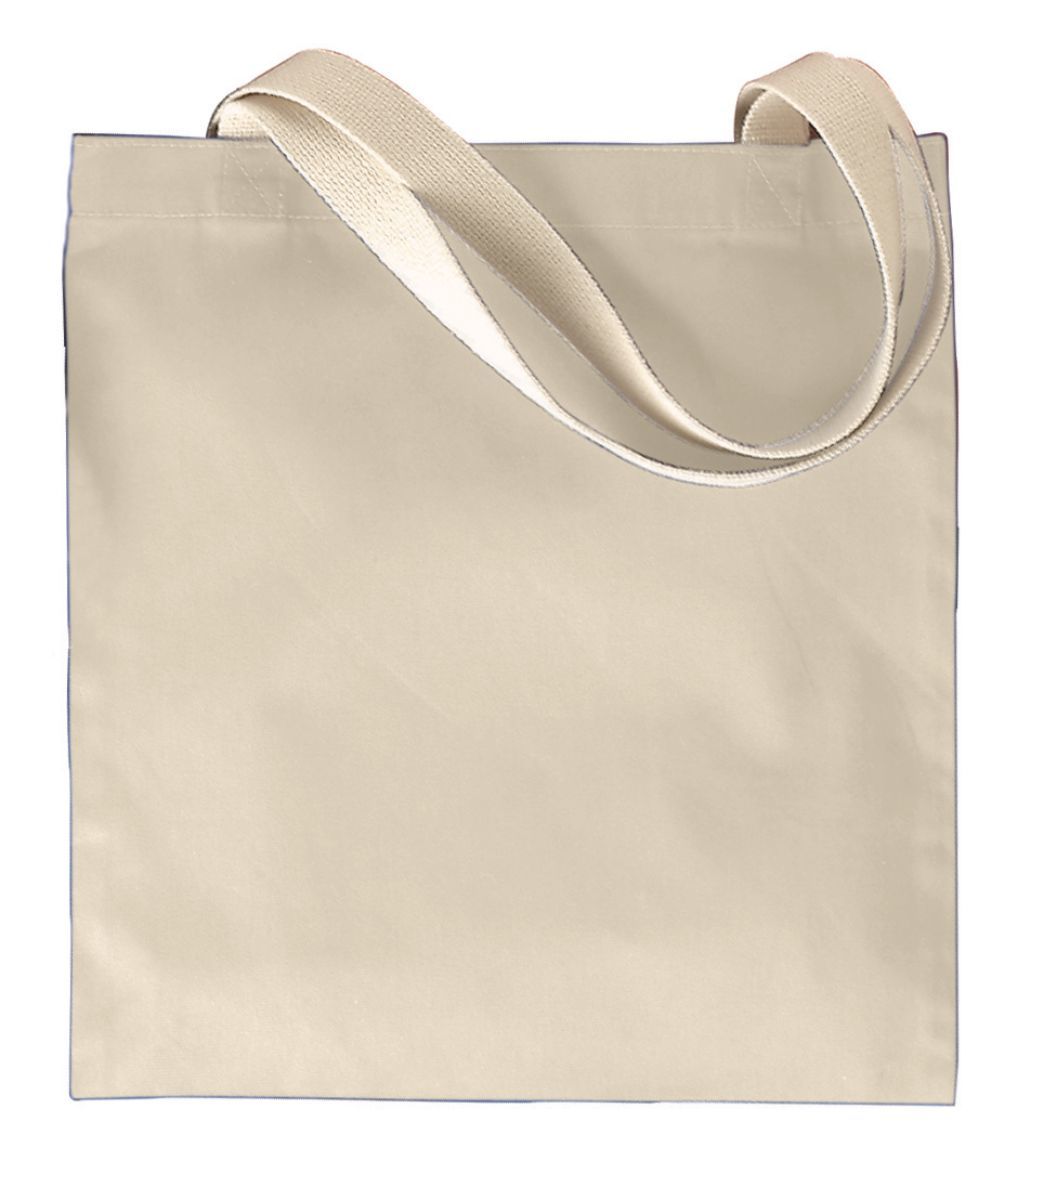 Augusta Sportswear Promotional Tote Bag